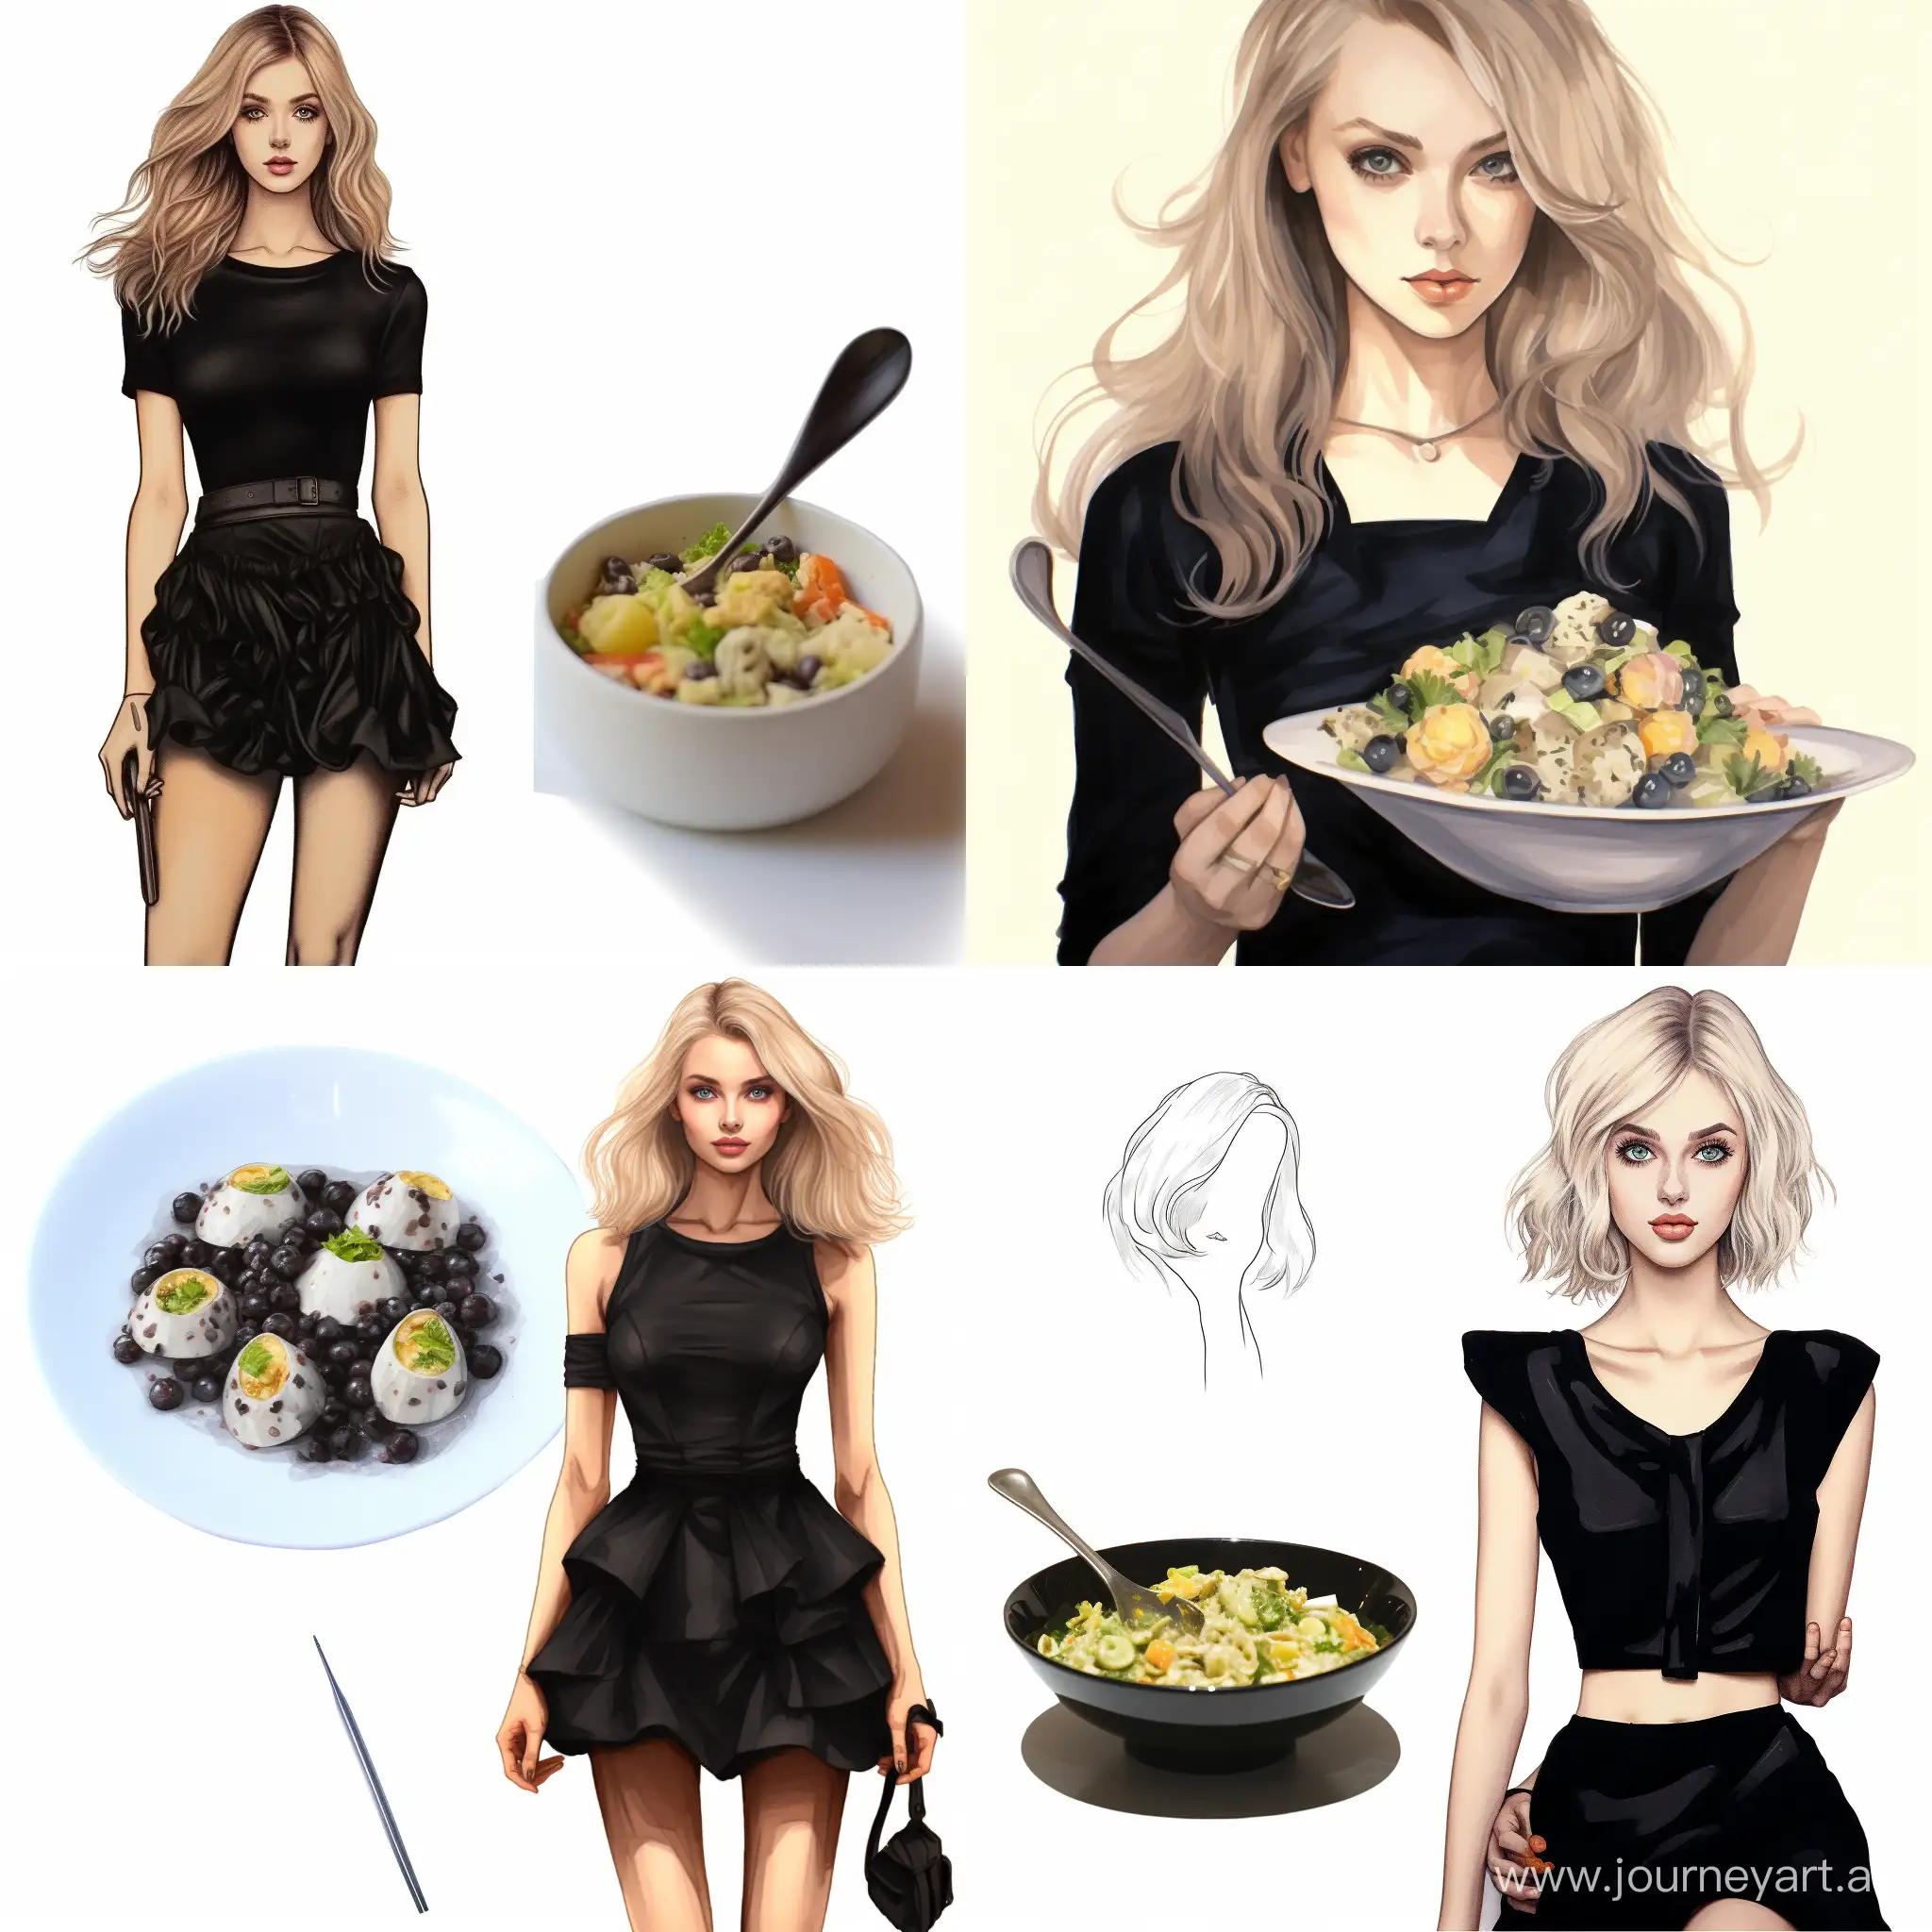 Stylish-Woman-Enjoying-a-Bowl-of-Olivier-Salad-in-Elegant-Black-Dress